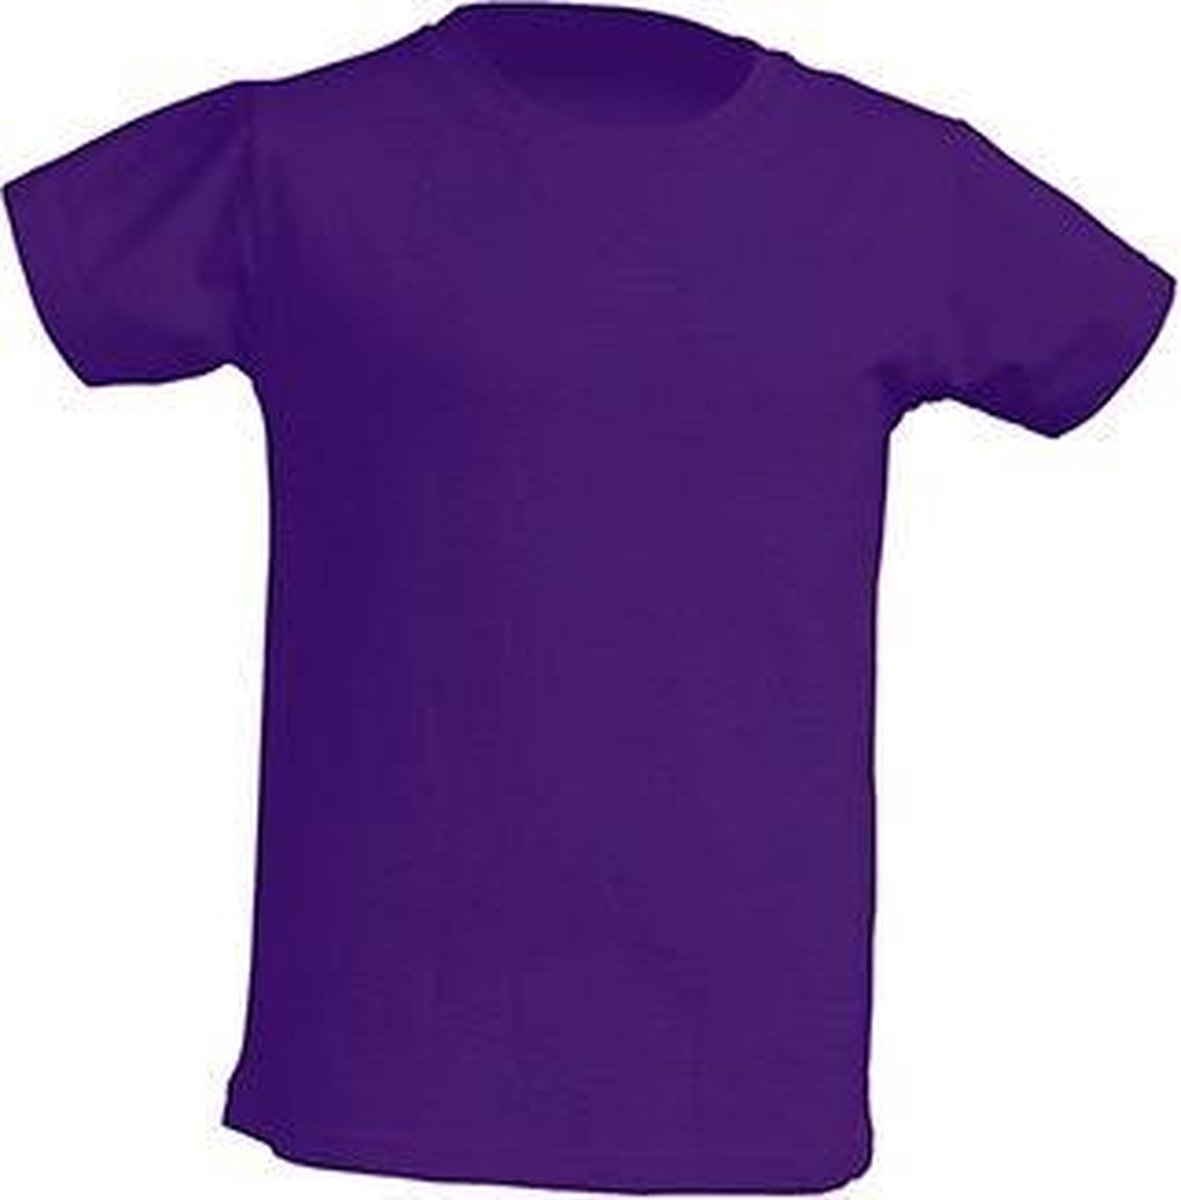 JHK Kinder t-shirt in Paars maat 5-6 jaar (116) - set van 5 stuks